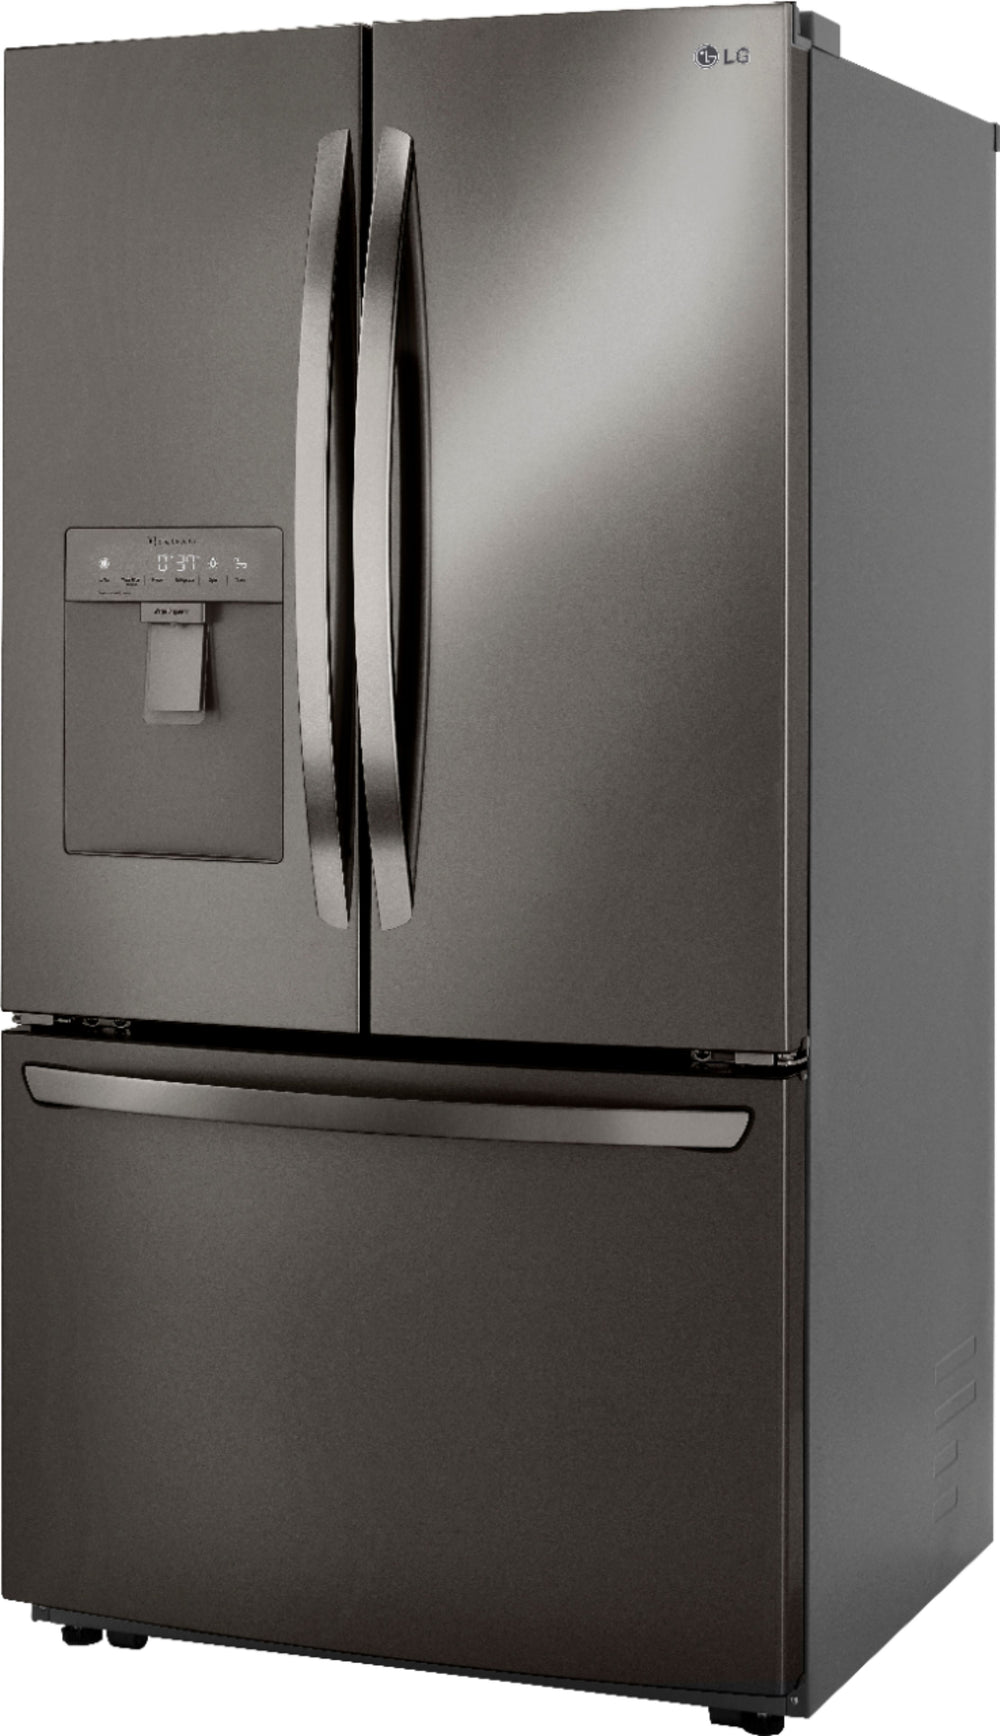 LG - 29 Cu. Ft. 3-Door French Door Smart Refrigerator with Ice Maker and External Water Dispenser - Black stainless steel_1